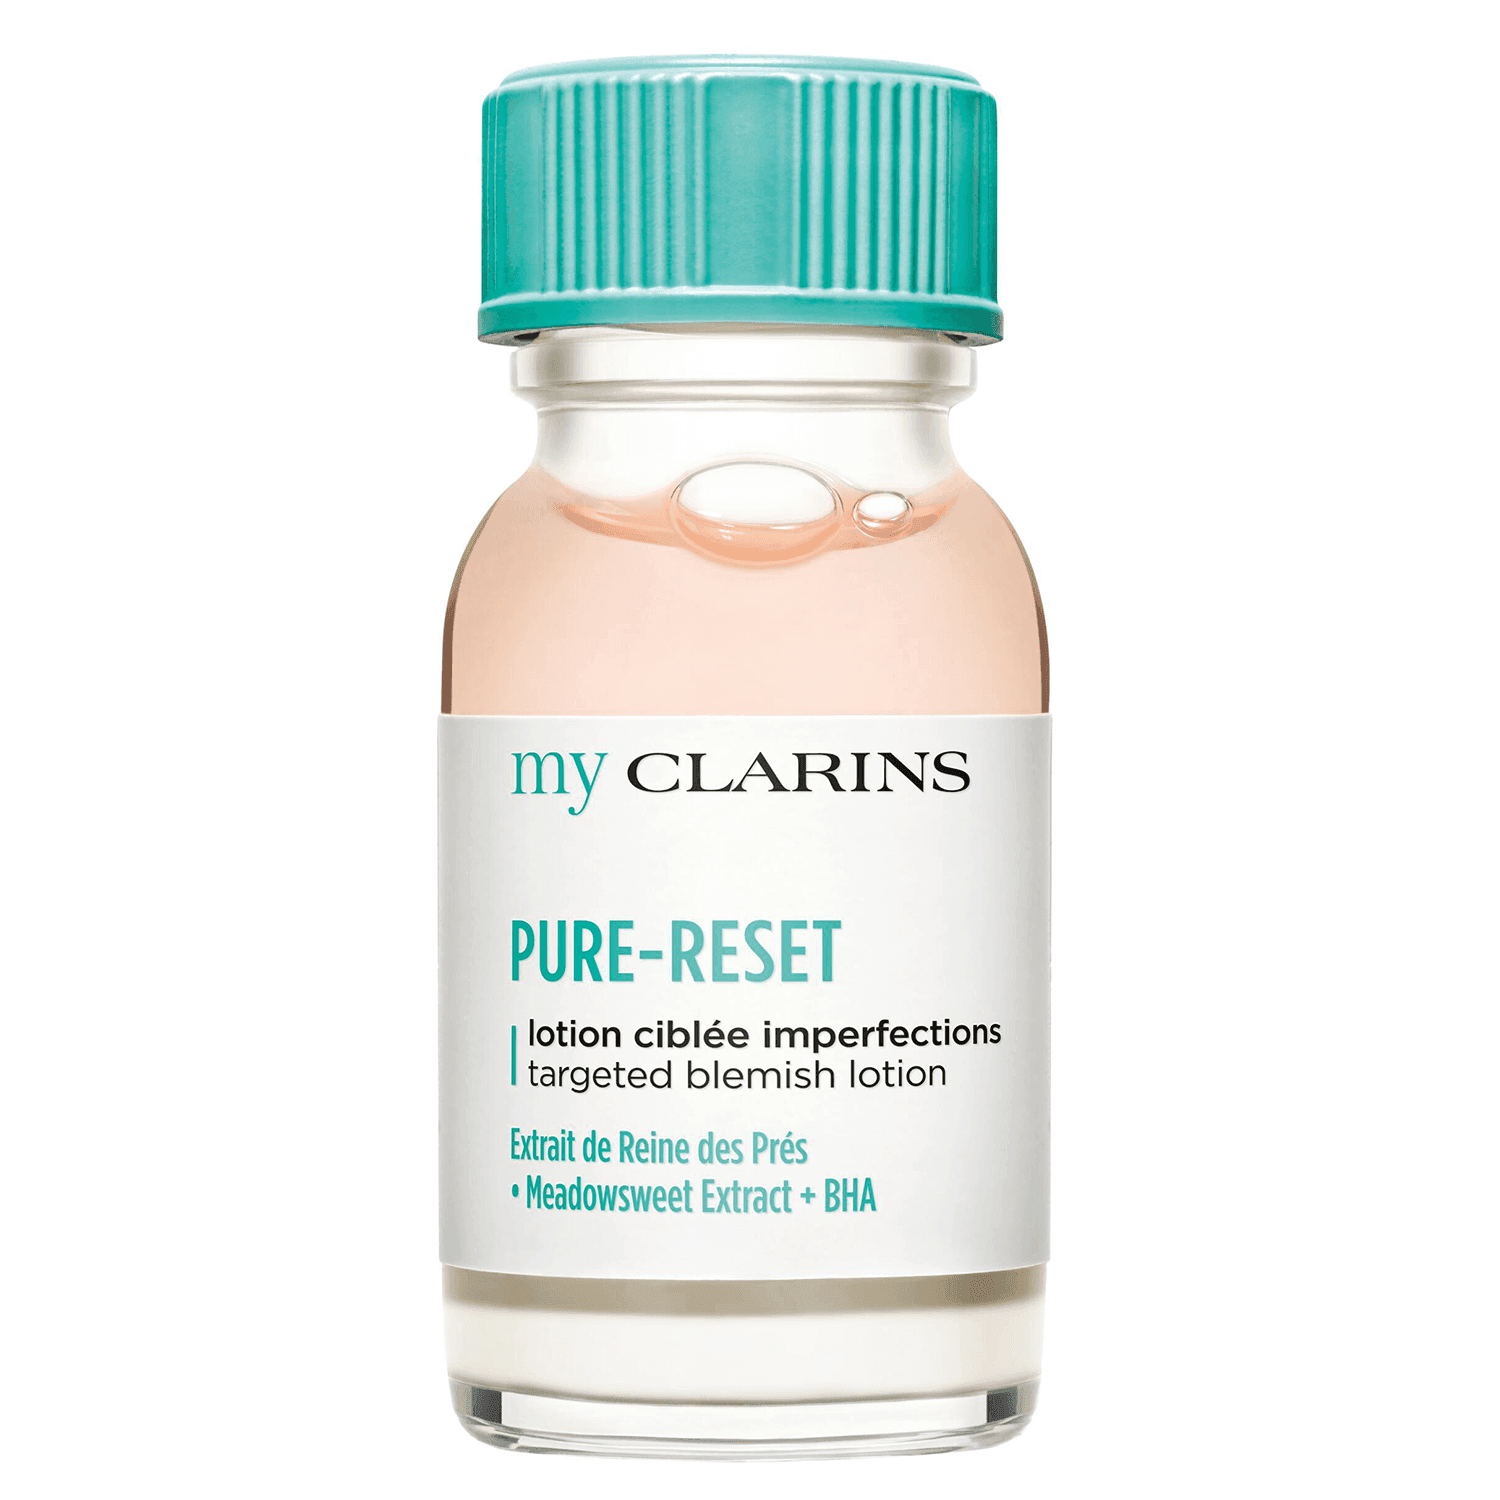 myClarins - PURE-RESET lotion cibléeimperfections